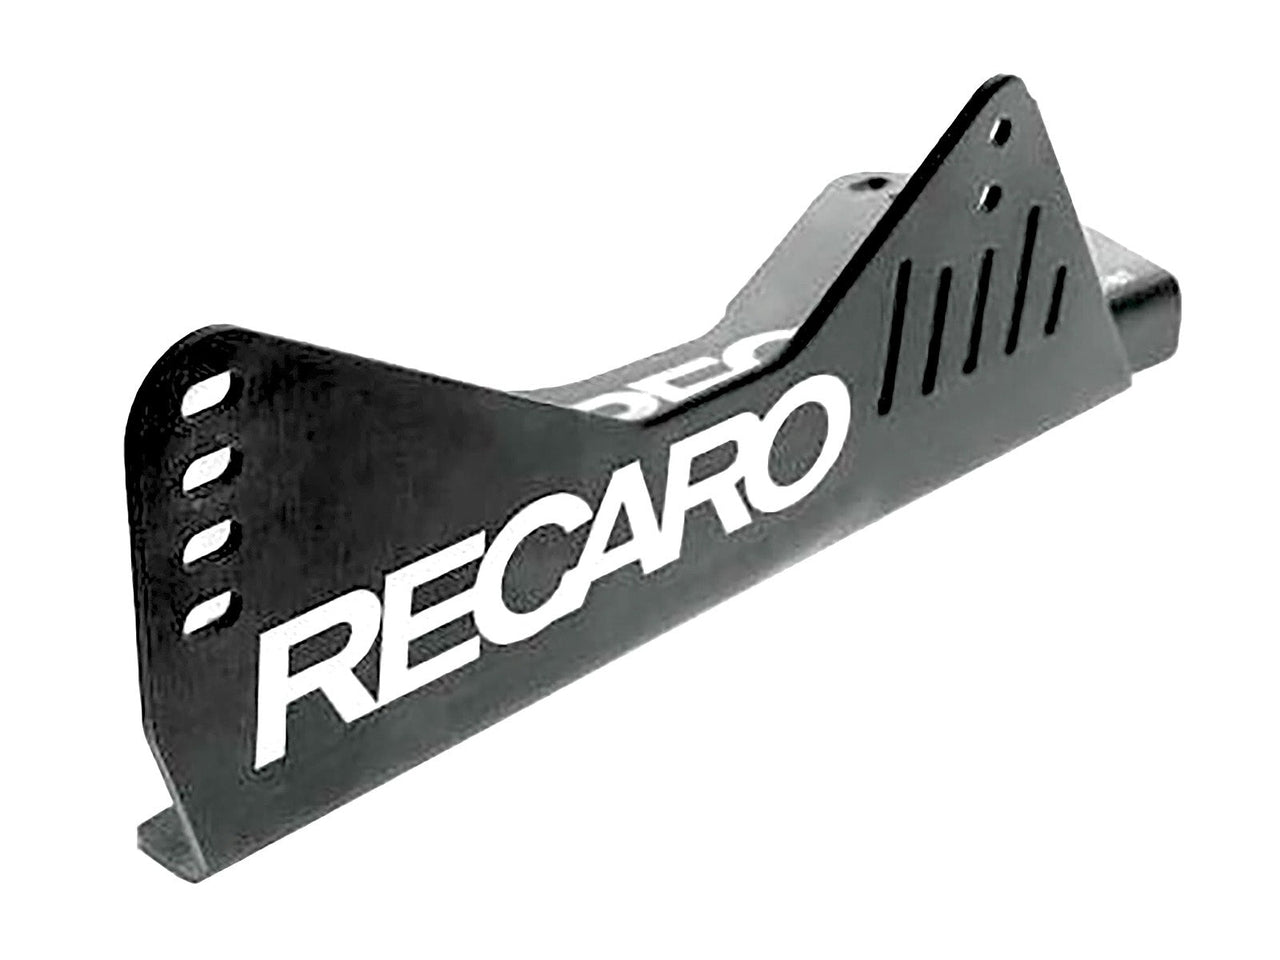 Recaro Steel Sidemounts (XL Size)